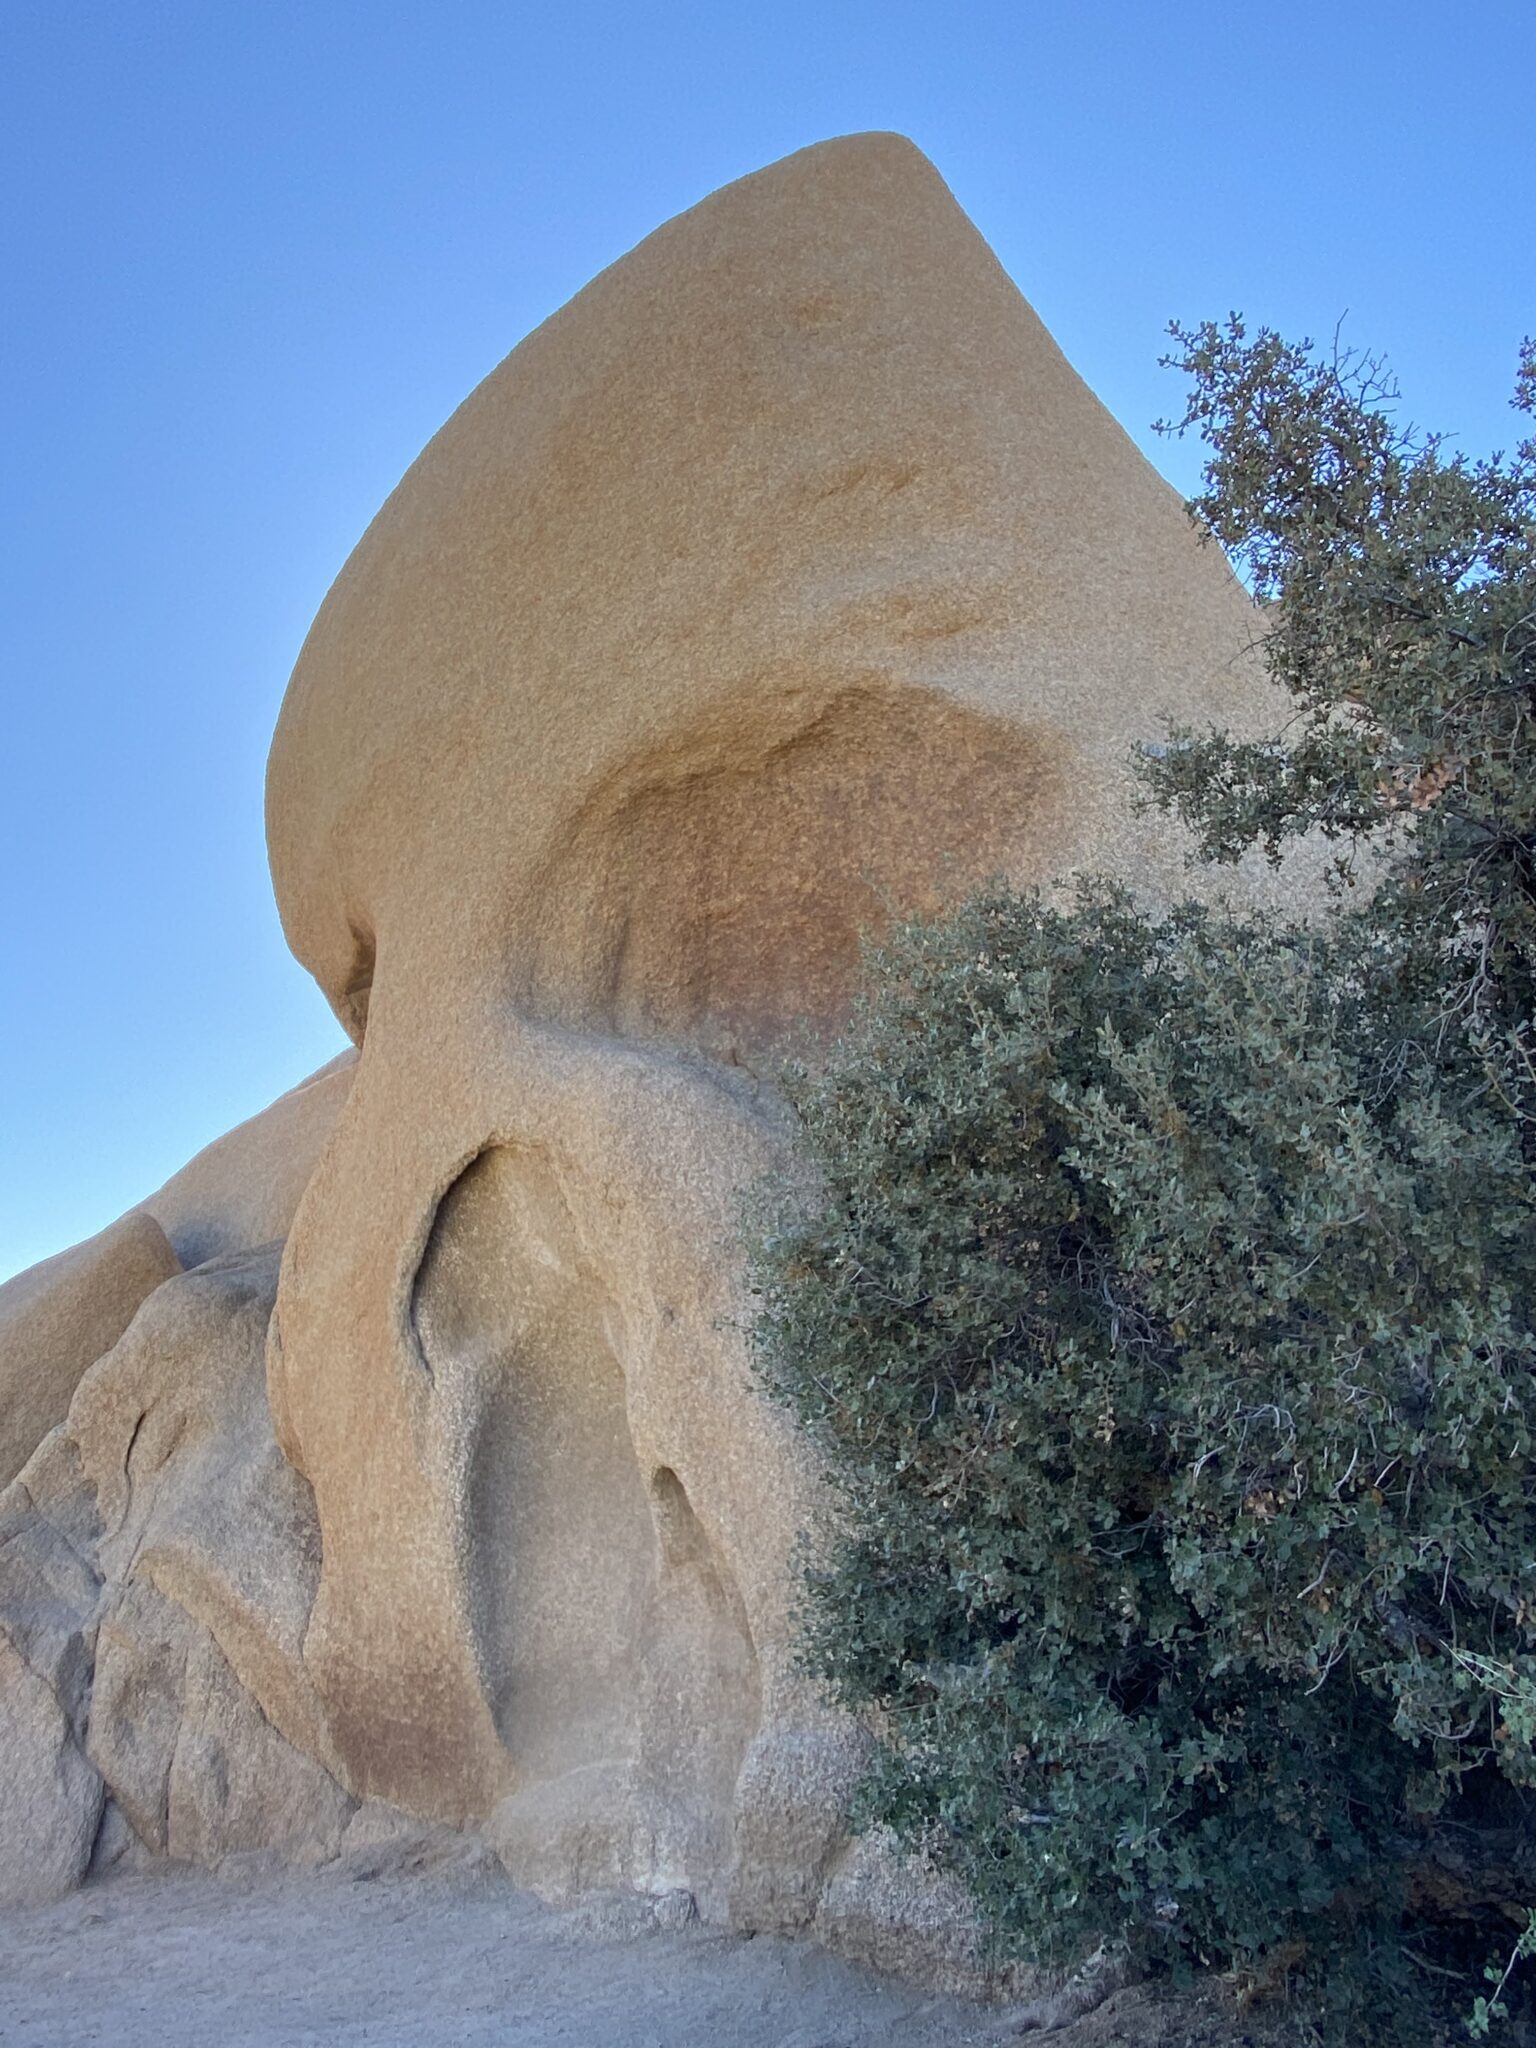 Boulder shaped like a skull in Joshua Tree National Park